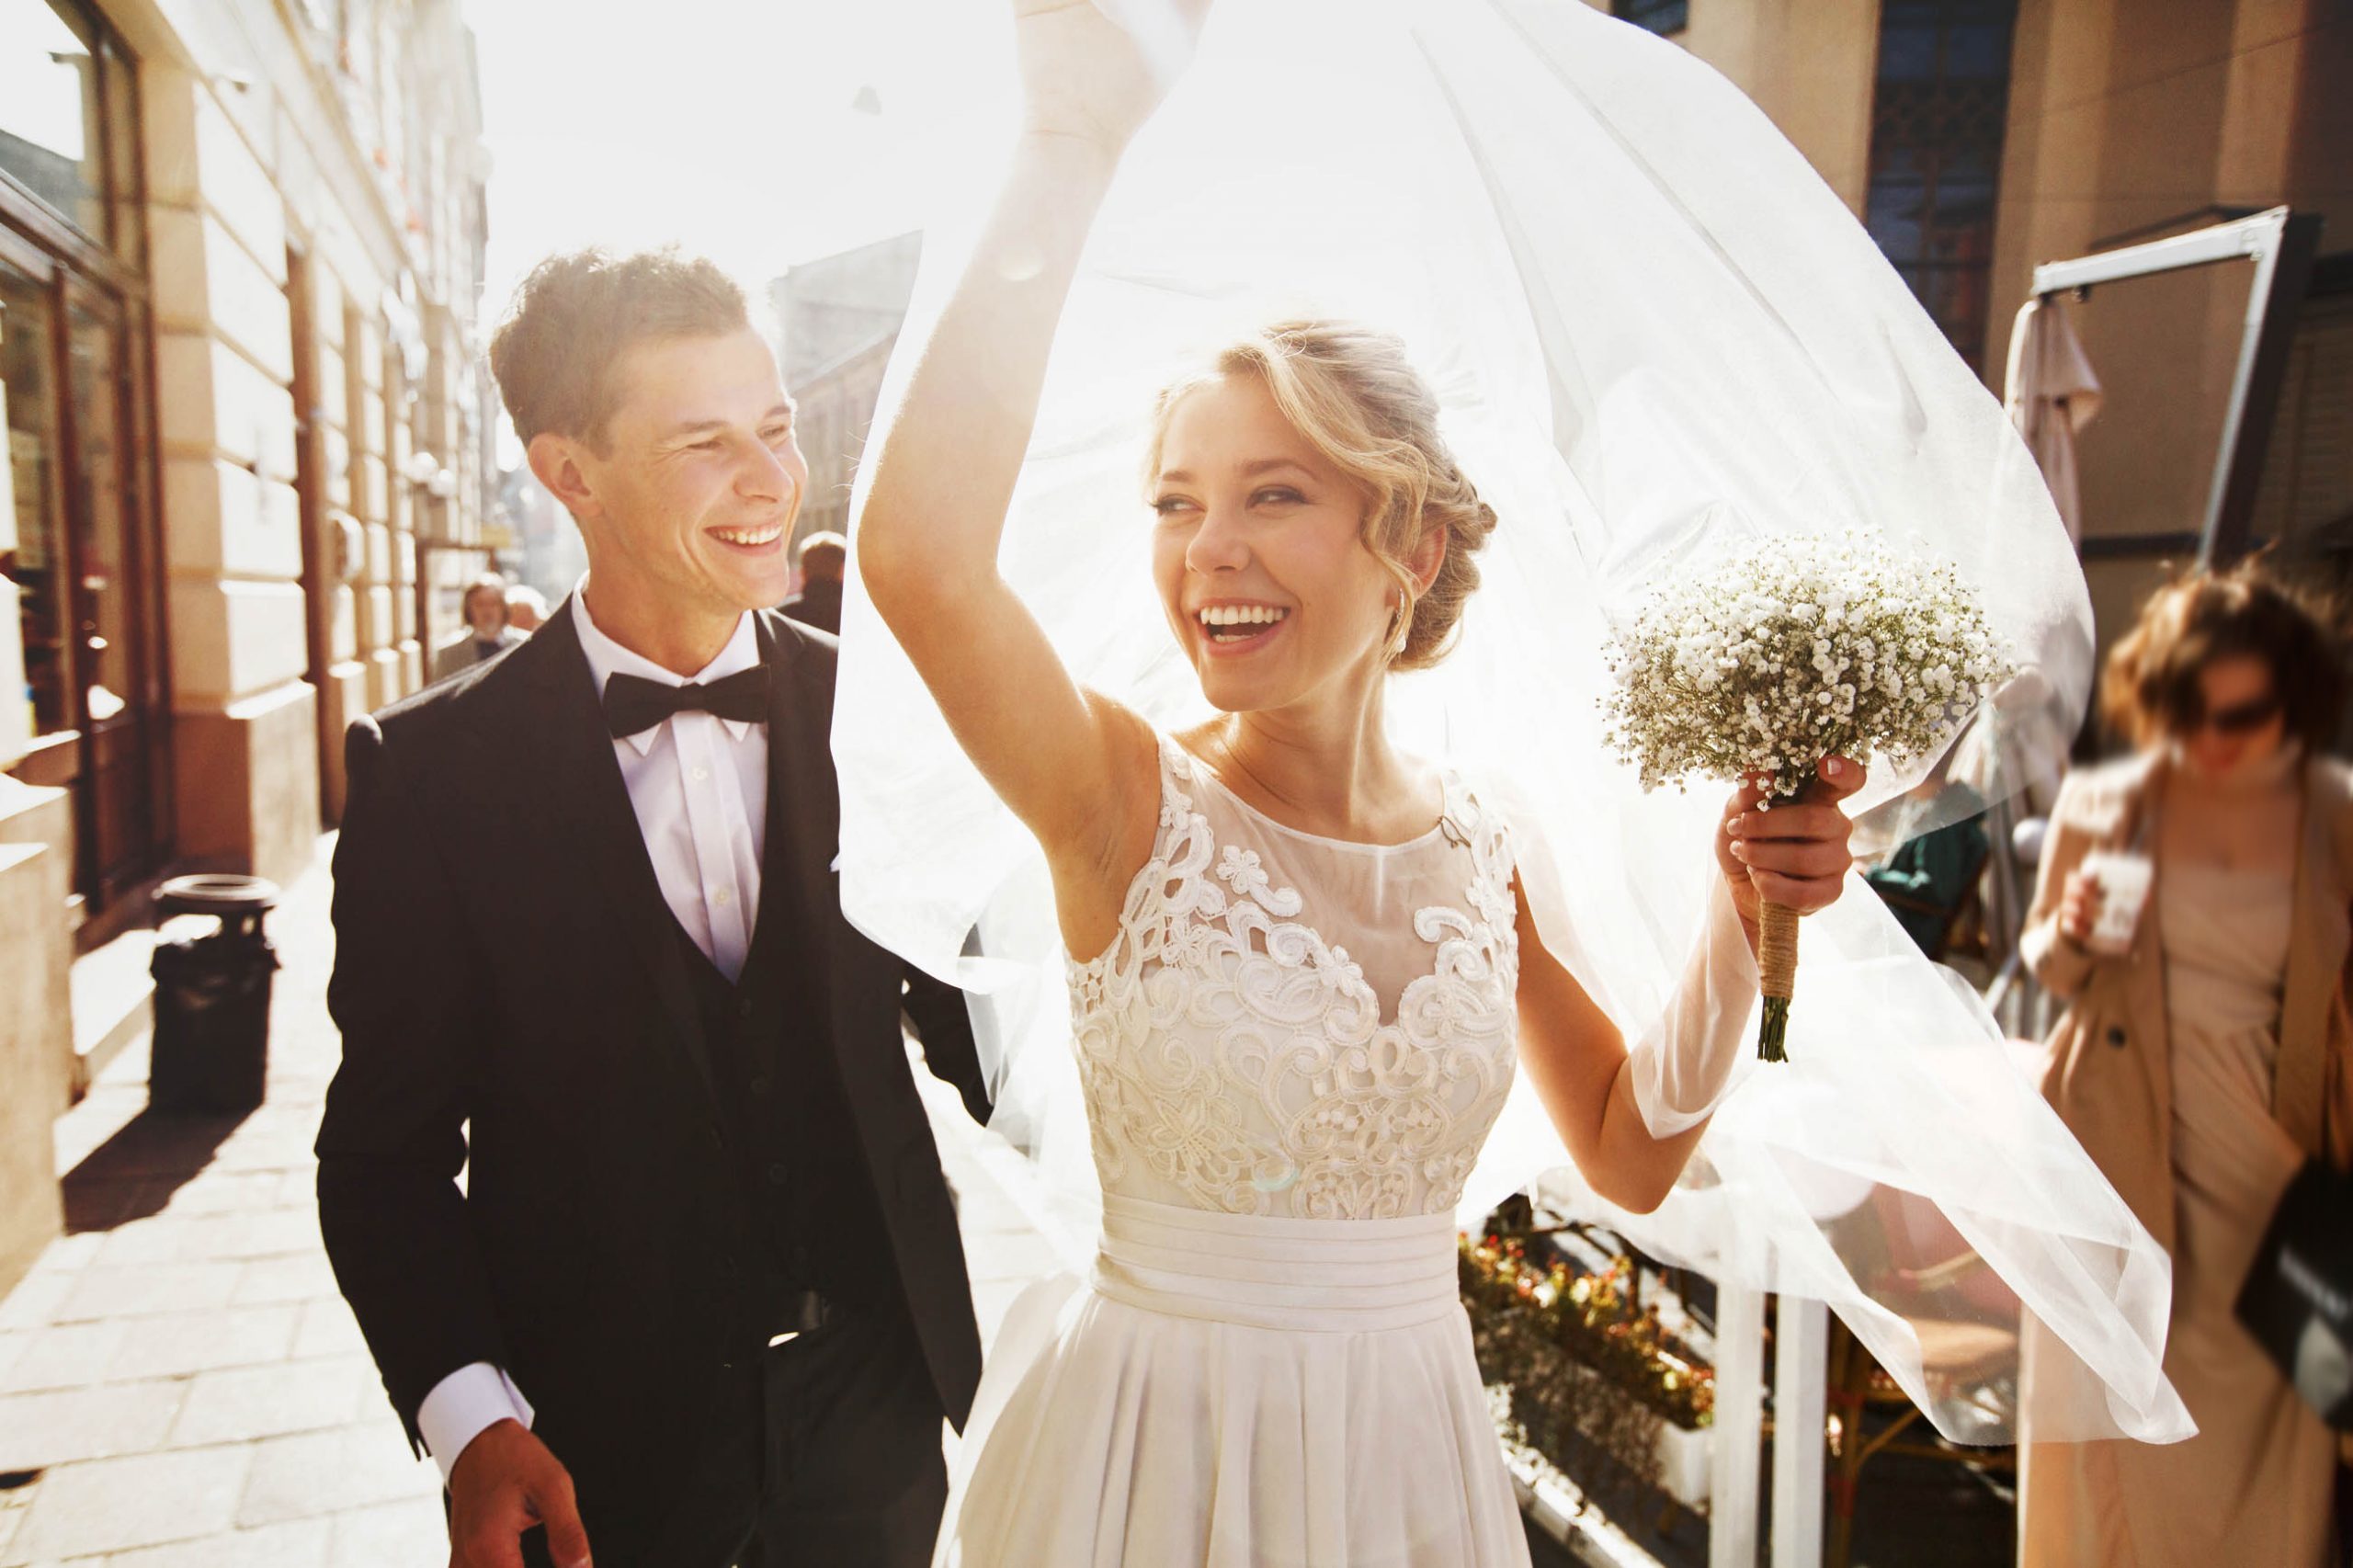 Schedule a Free Wedding Dress Consultation - Fabricare Center